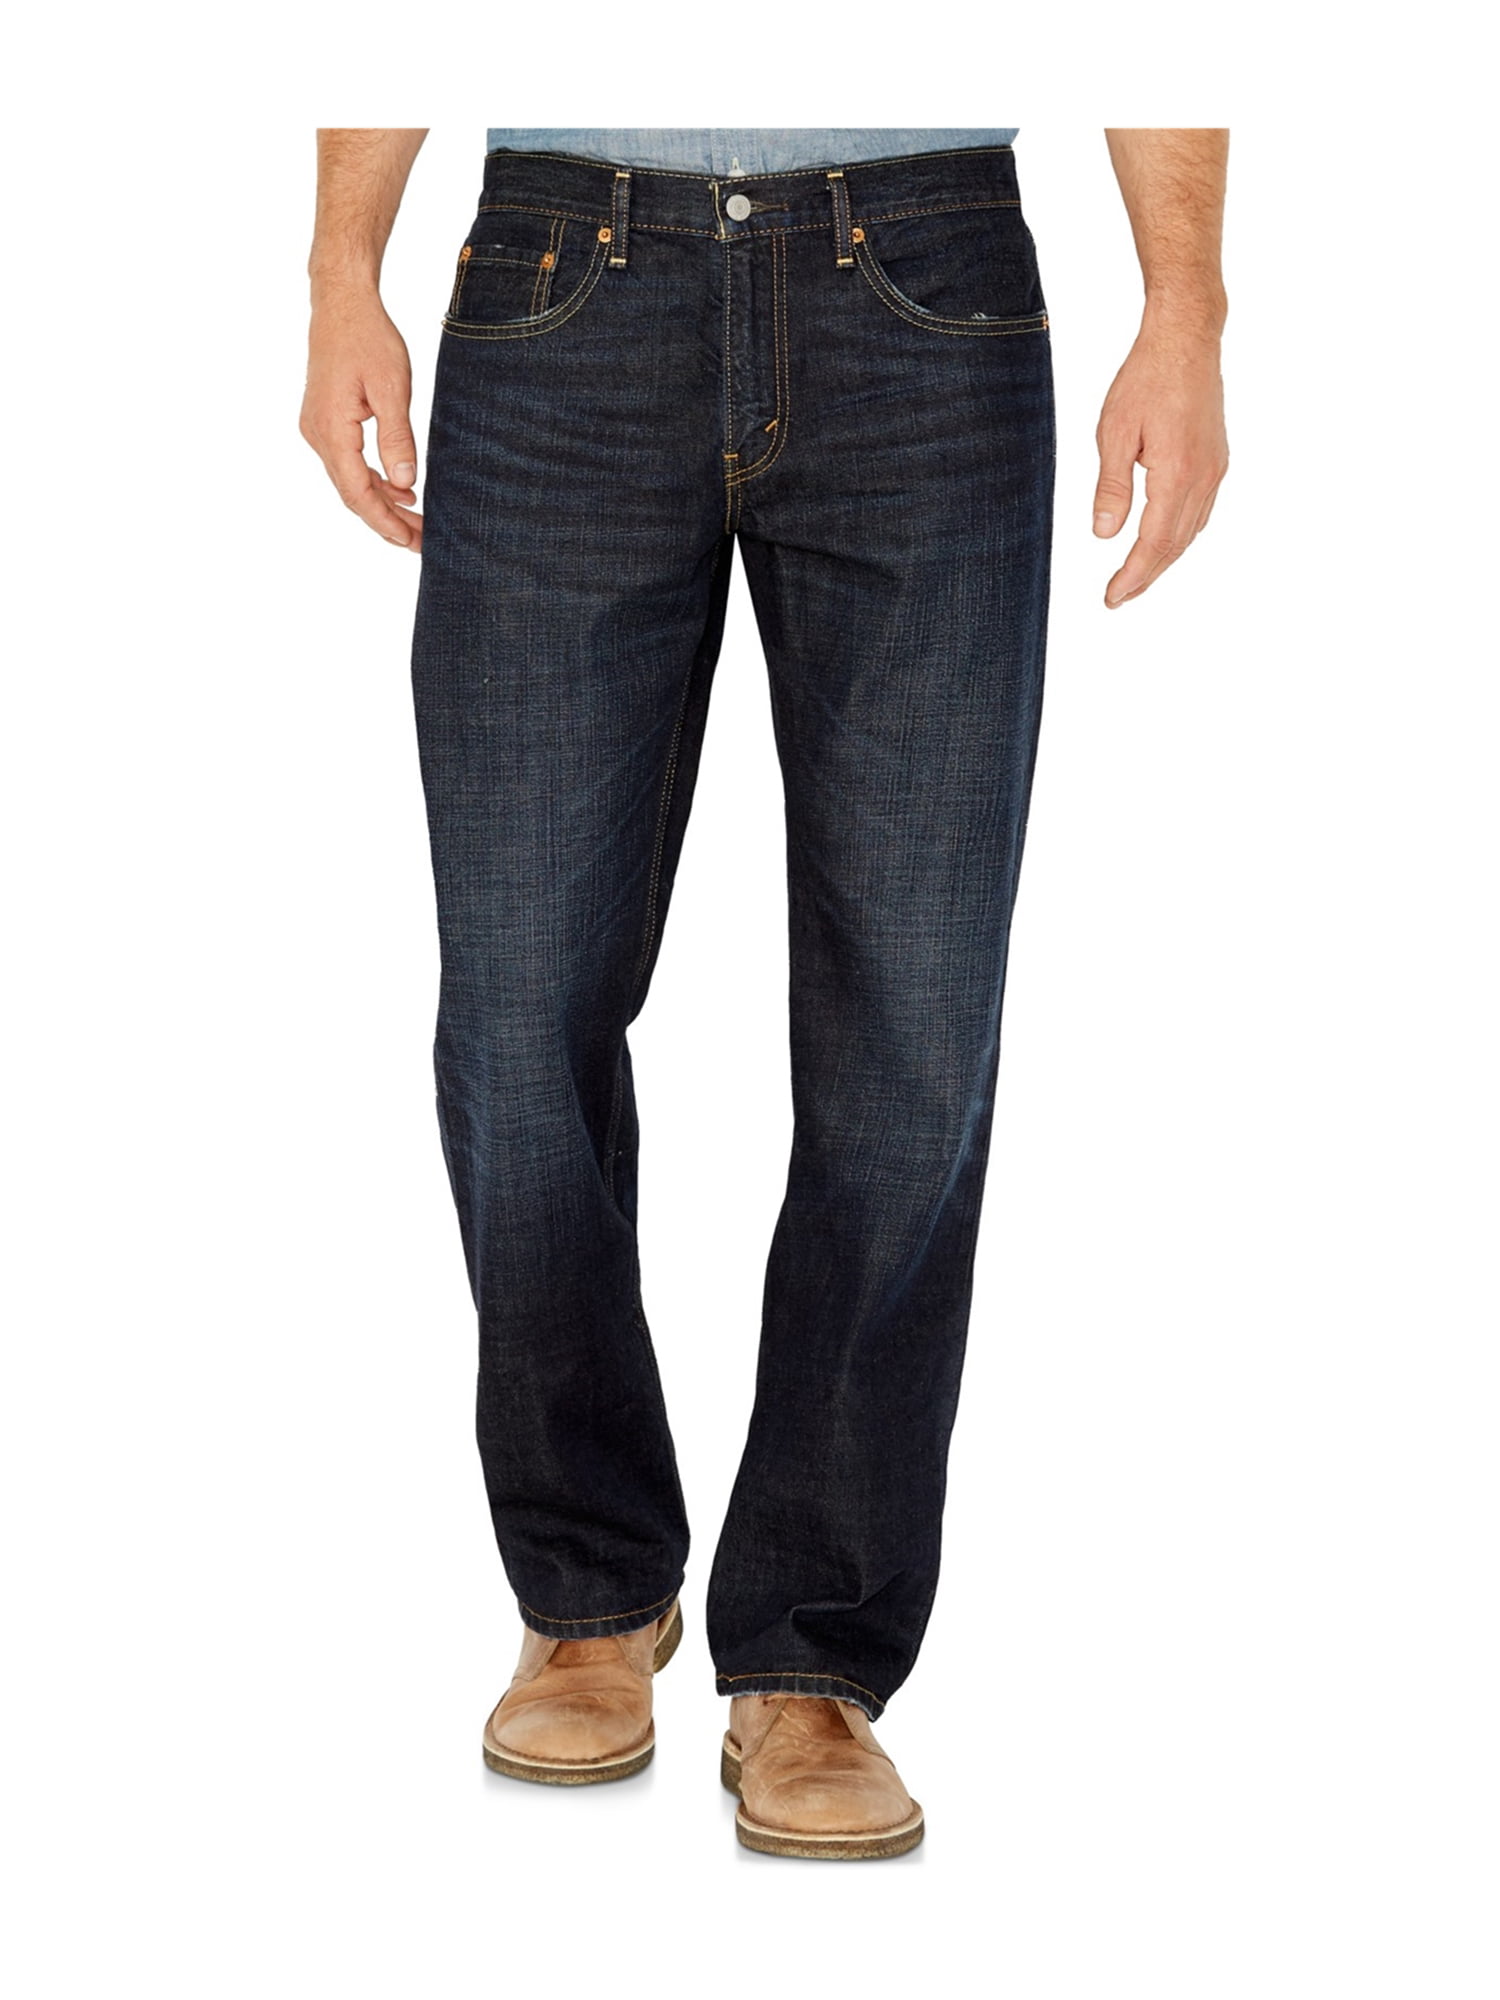 Levi's Mens 559 Straight Leg Jeans indigoblack 40x38 | Walmart Canada